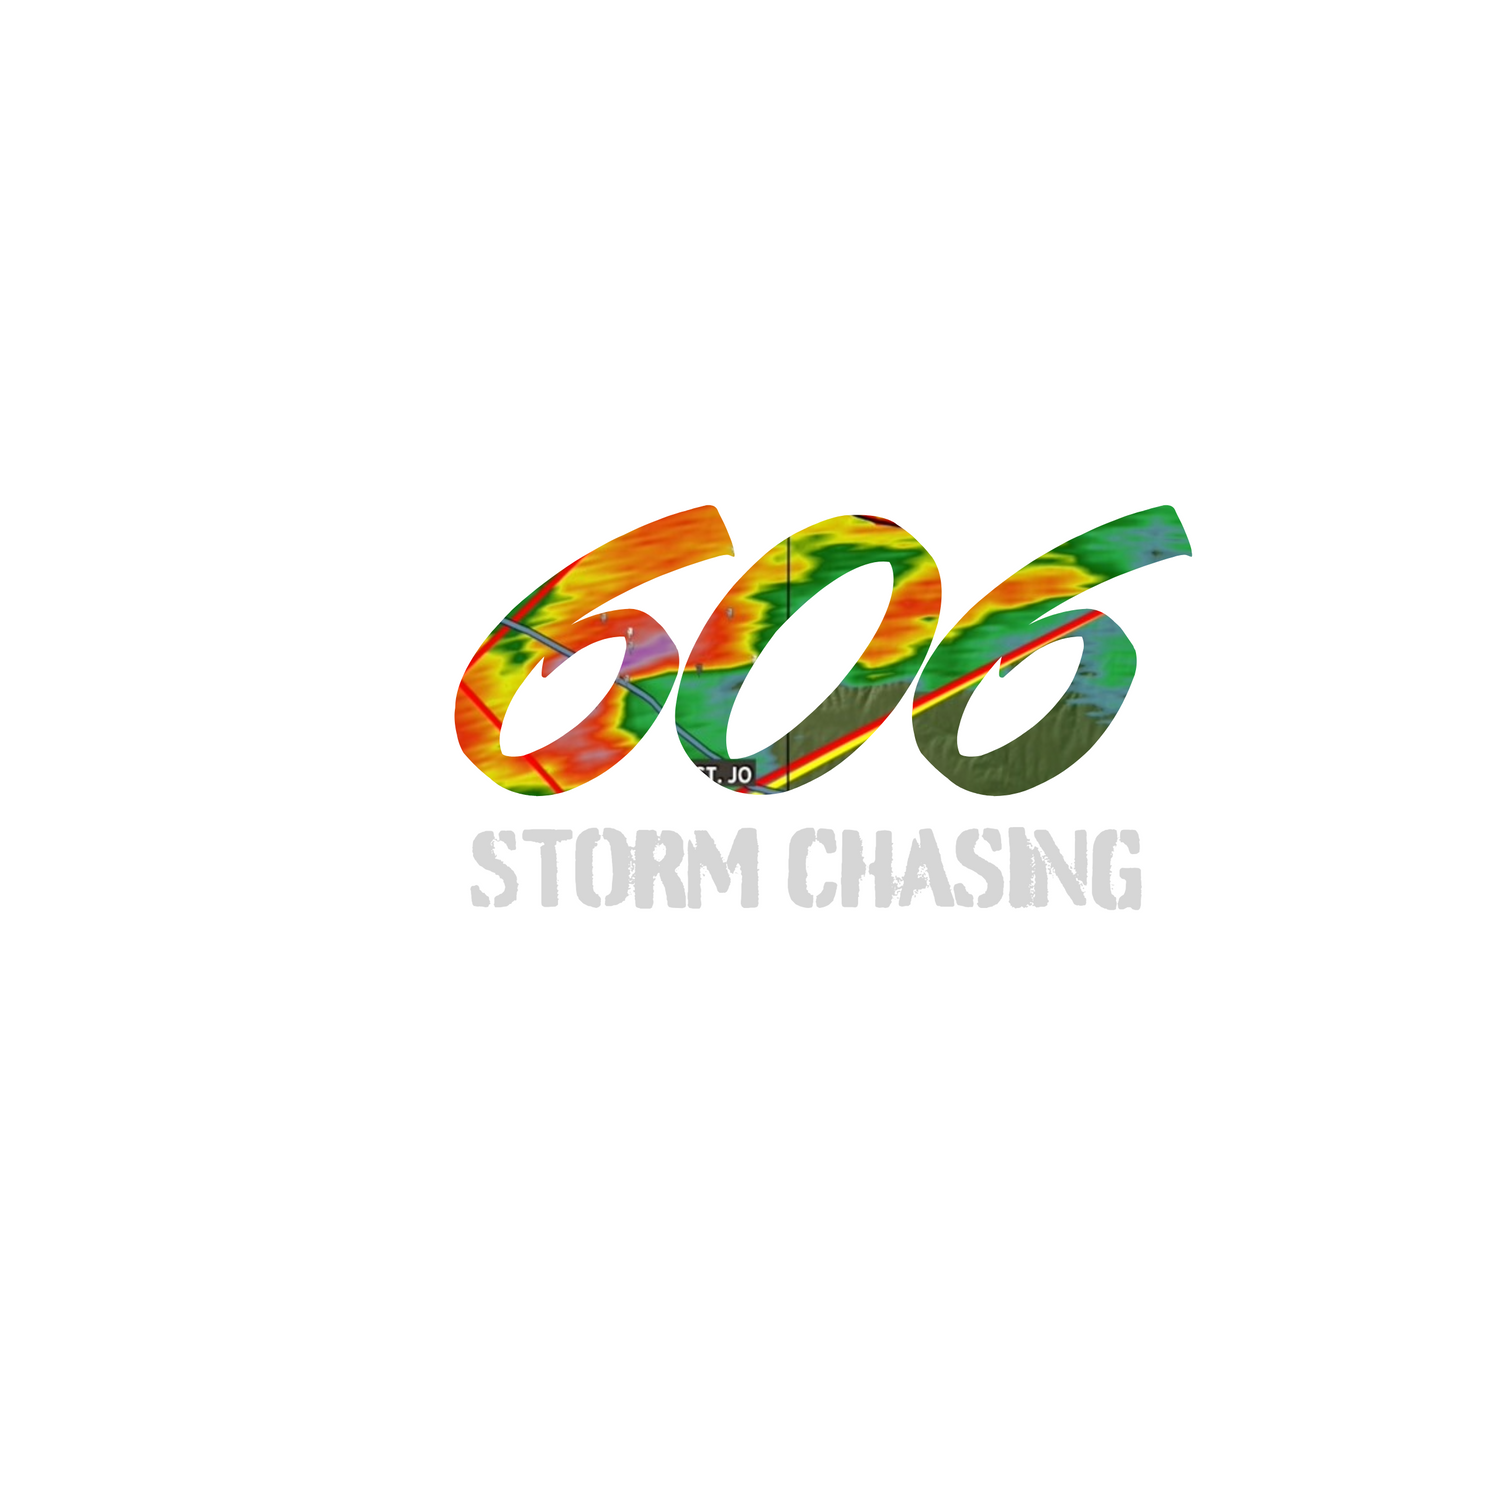 606 Storm Chasing - Chris Hall